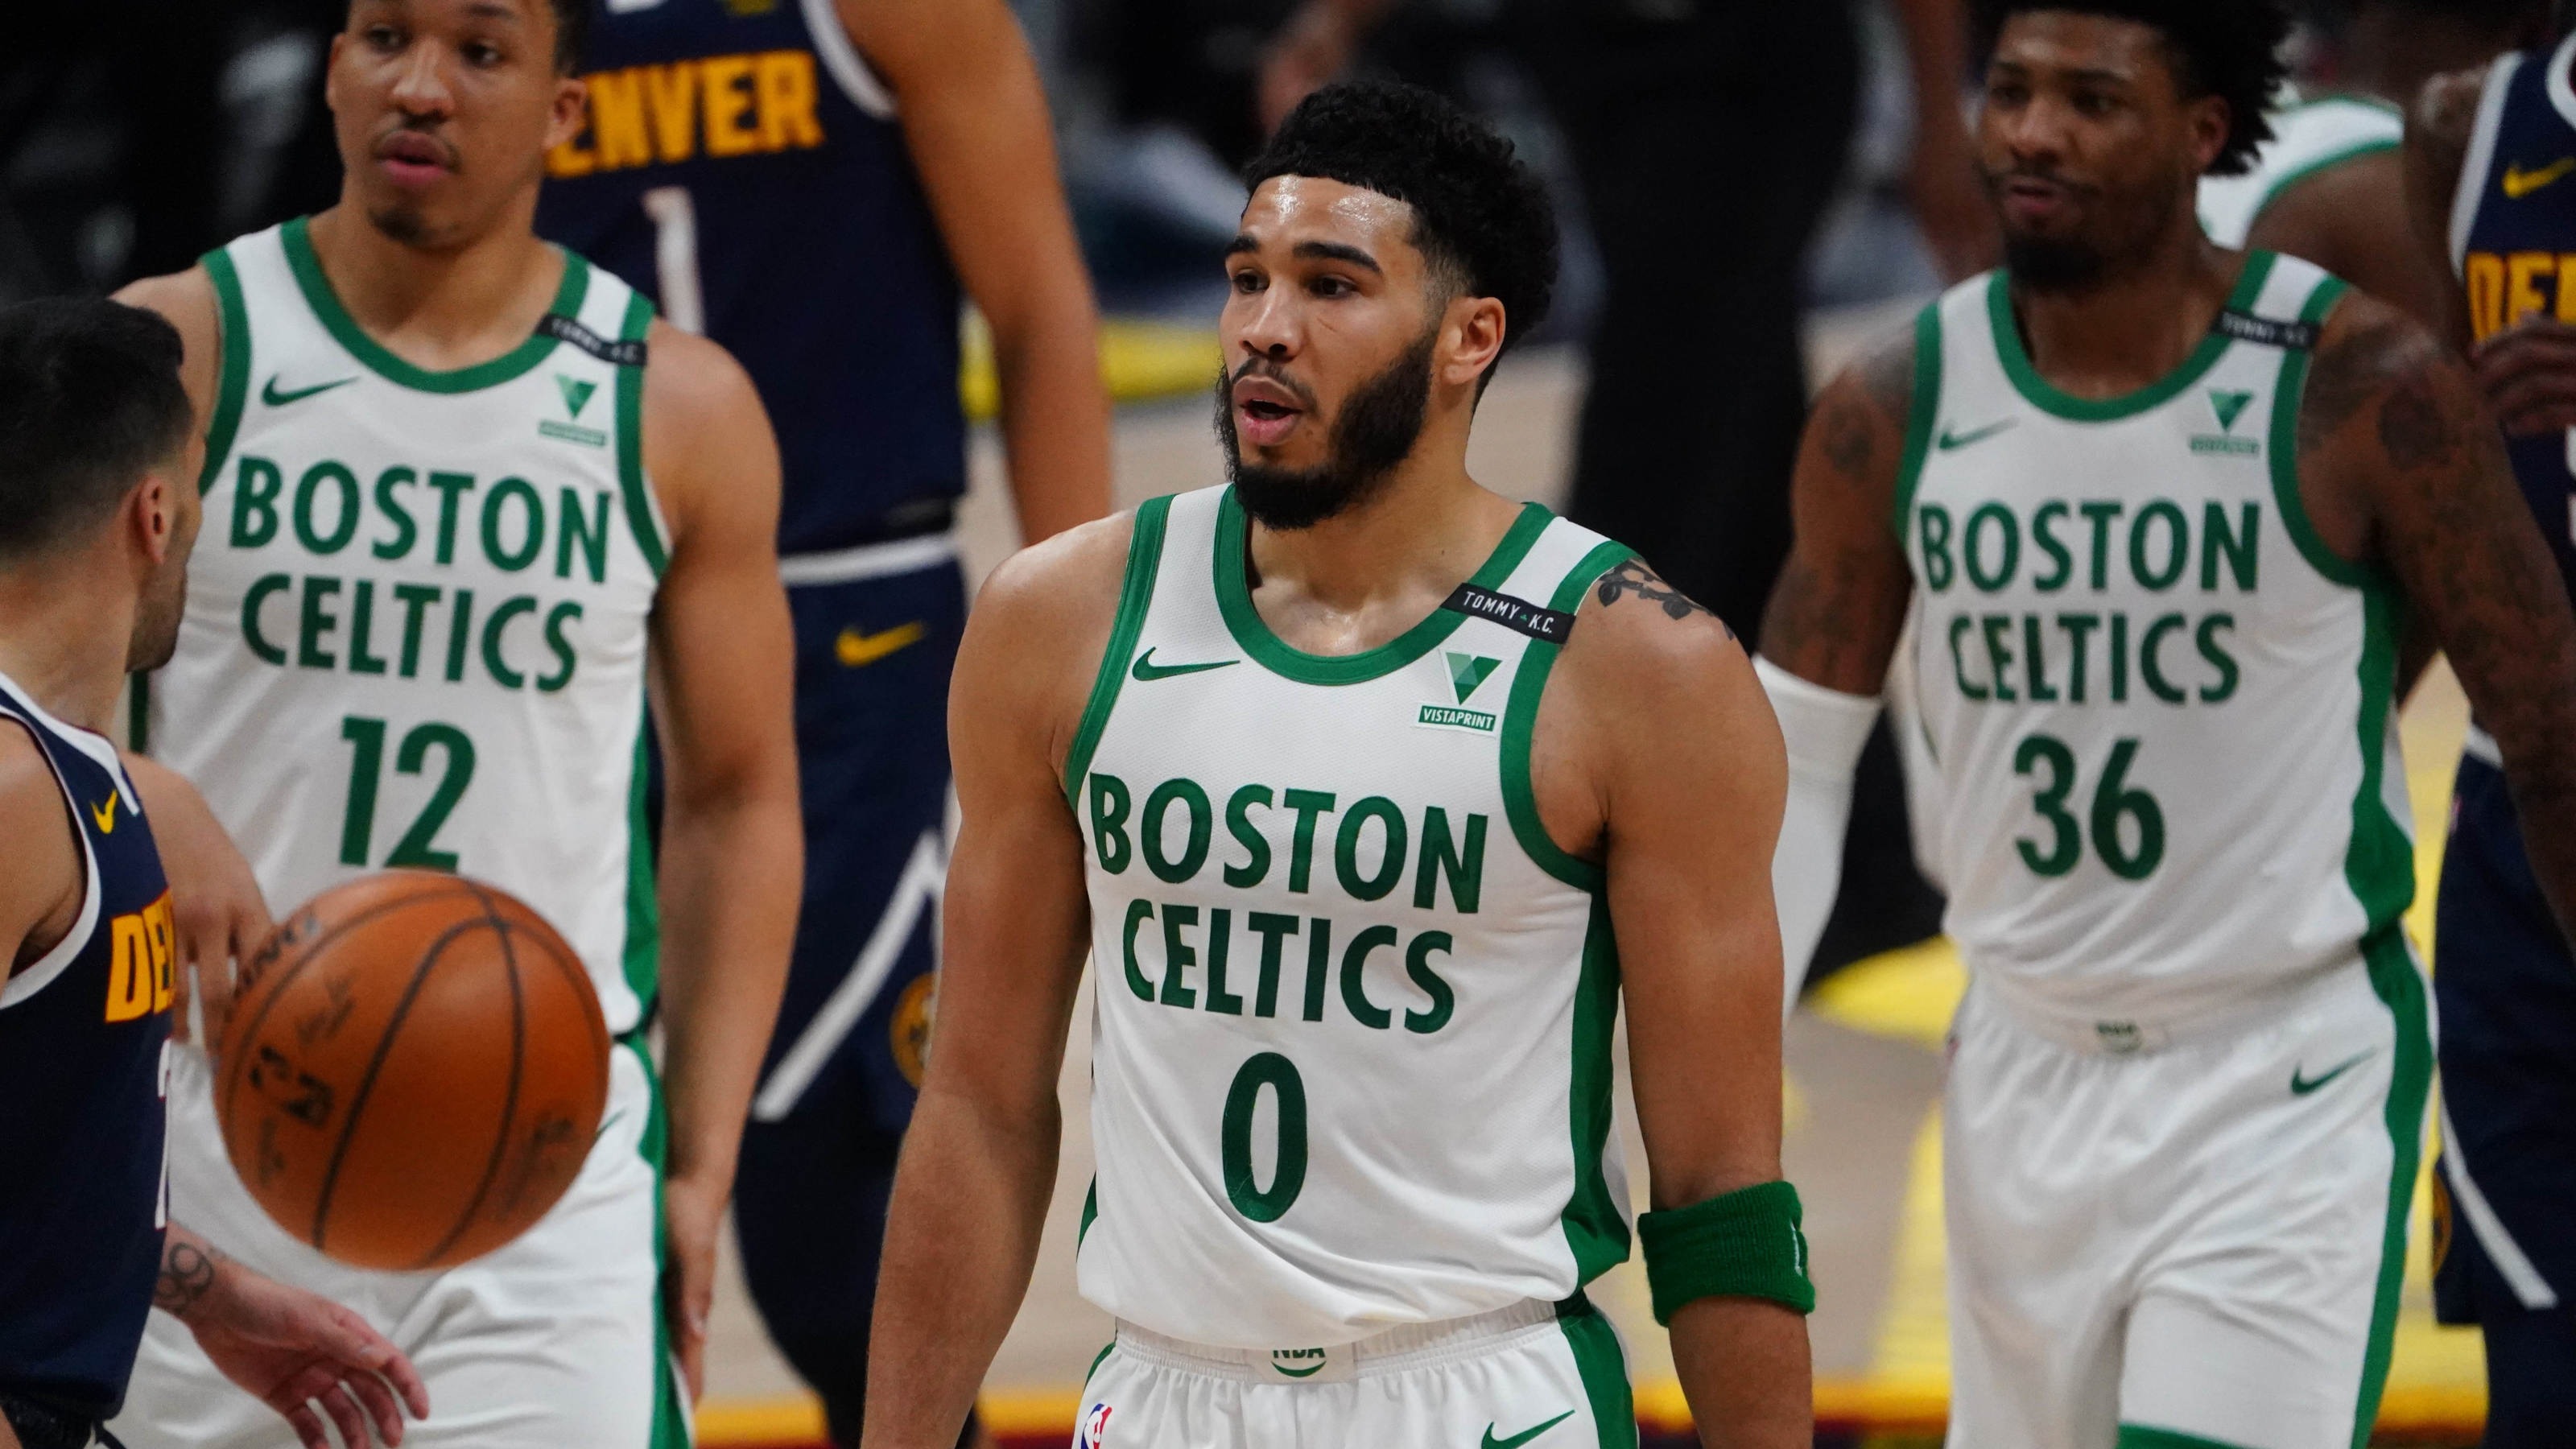 The Boston Celtics (/?s?lt?ks/ SEL-tiks) are an American professional basketball team based in Boston. The Celtics compete in the National Basketball ...